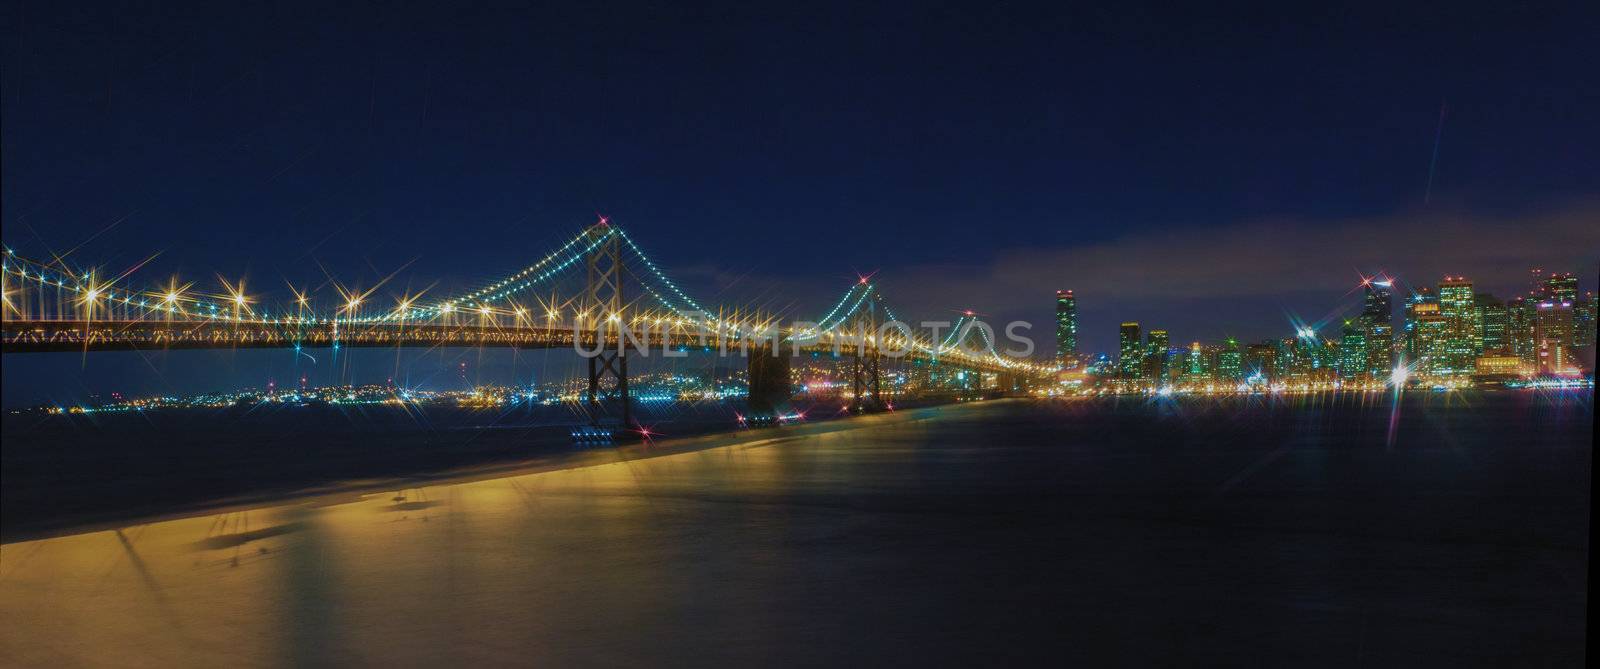 The San Francisco–Oakland Bay Bridge at Night by wolterk